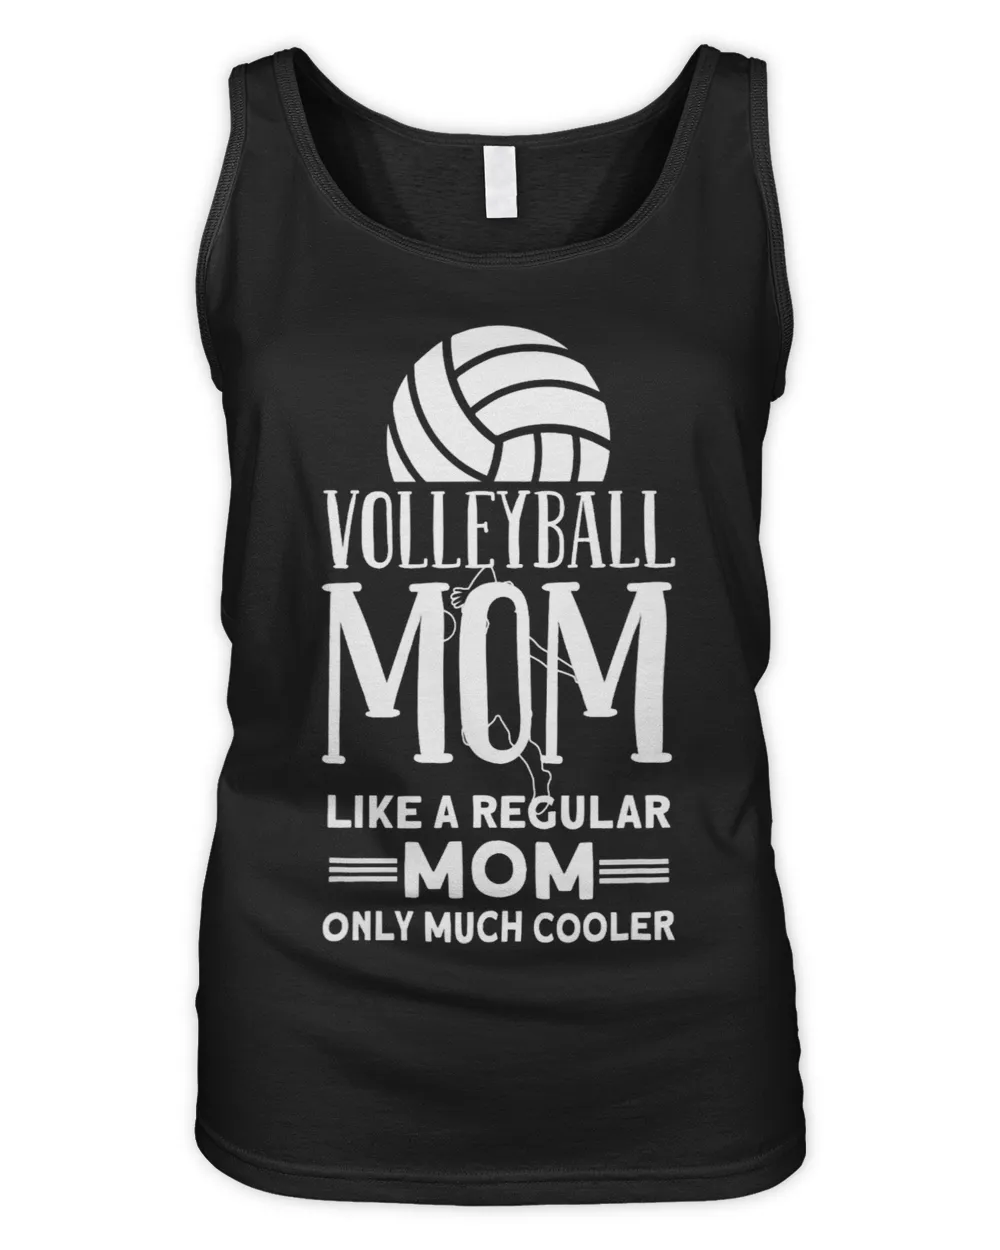 Volleyball Mom 2Volleyball 2